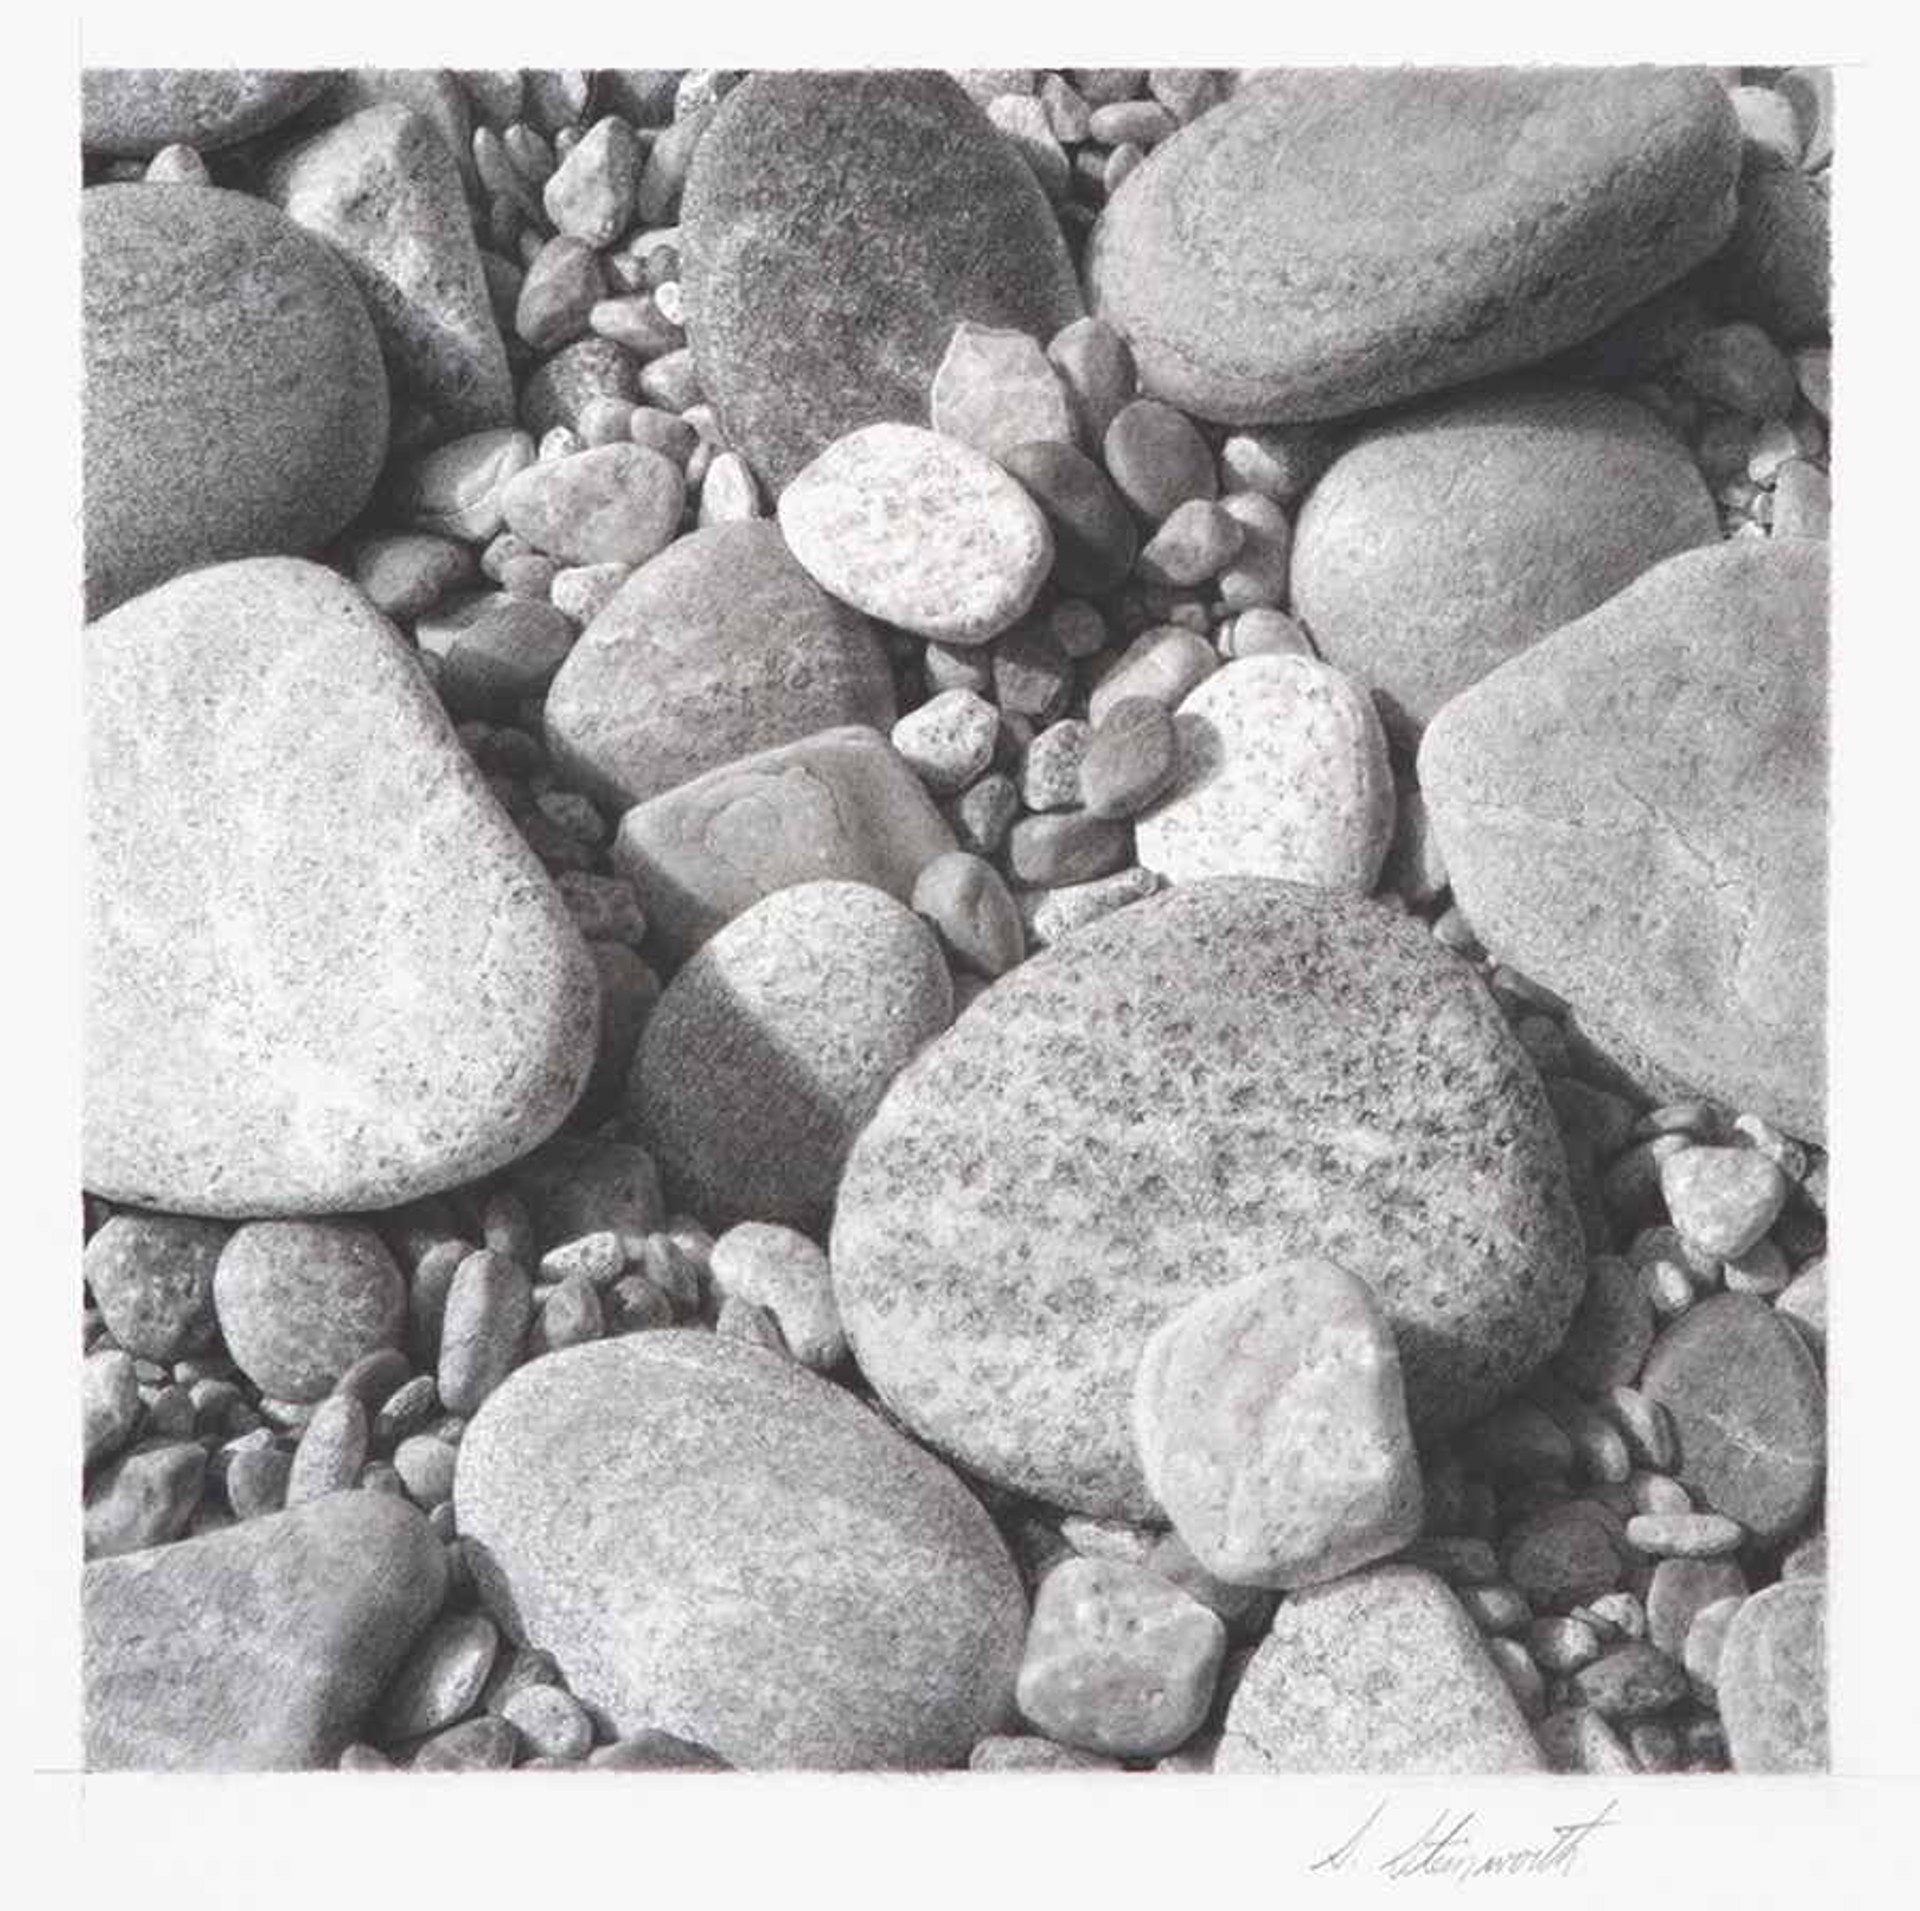 Beachstones #3 by Skip Steinworth